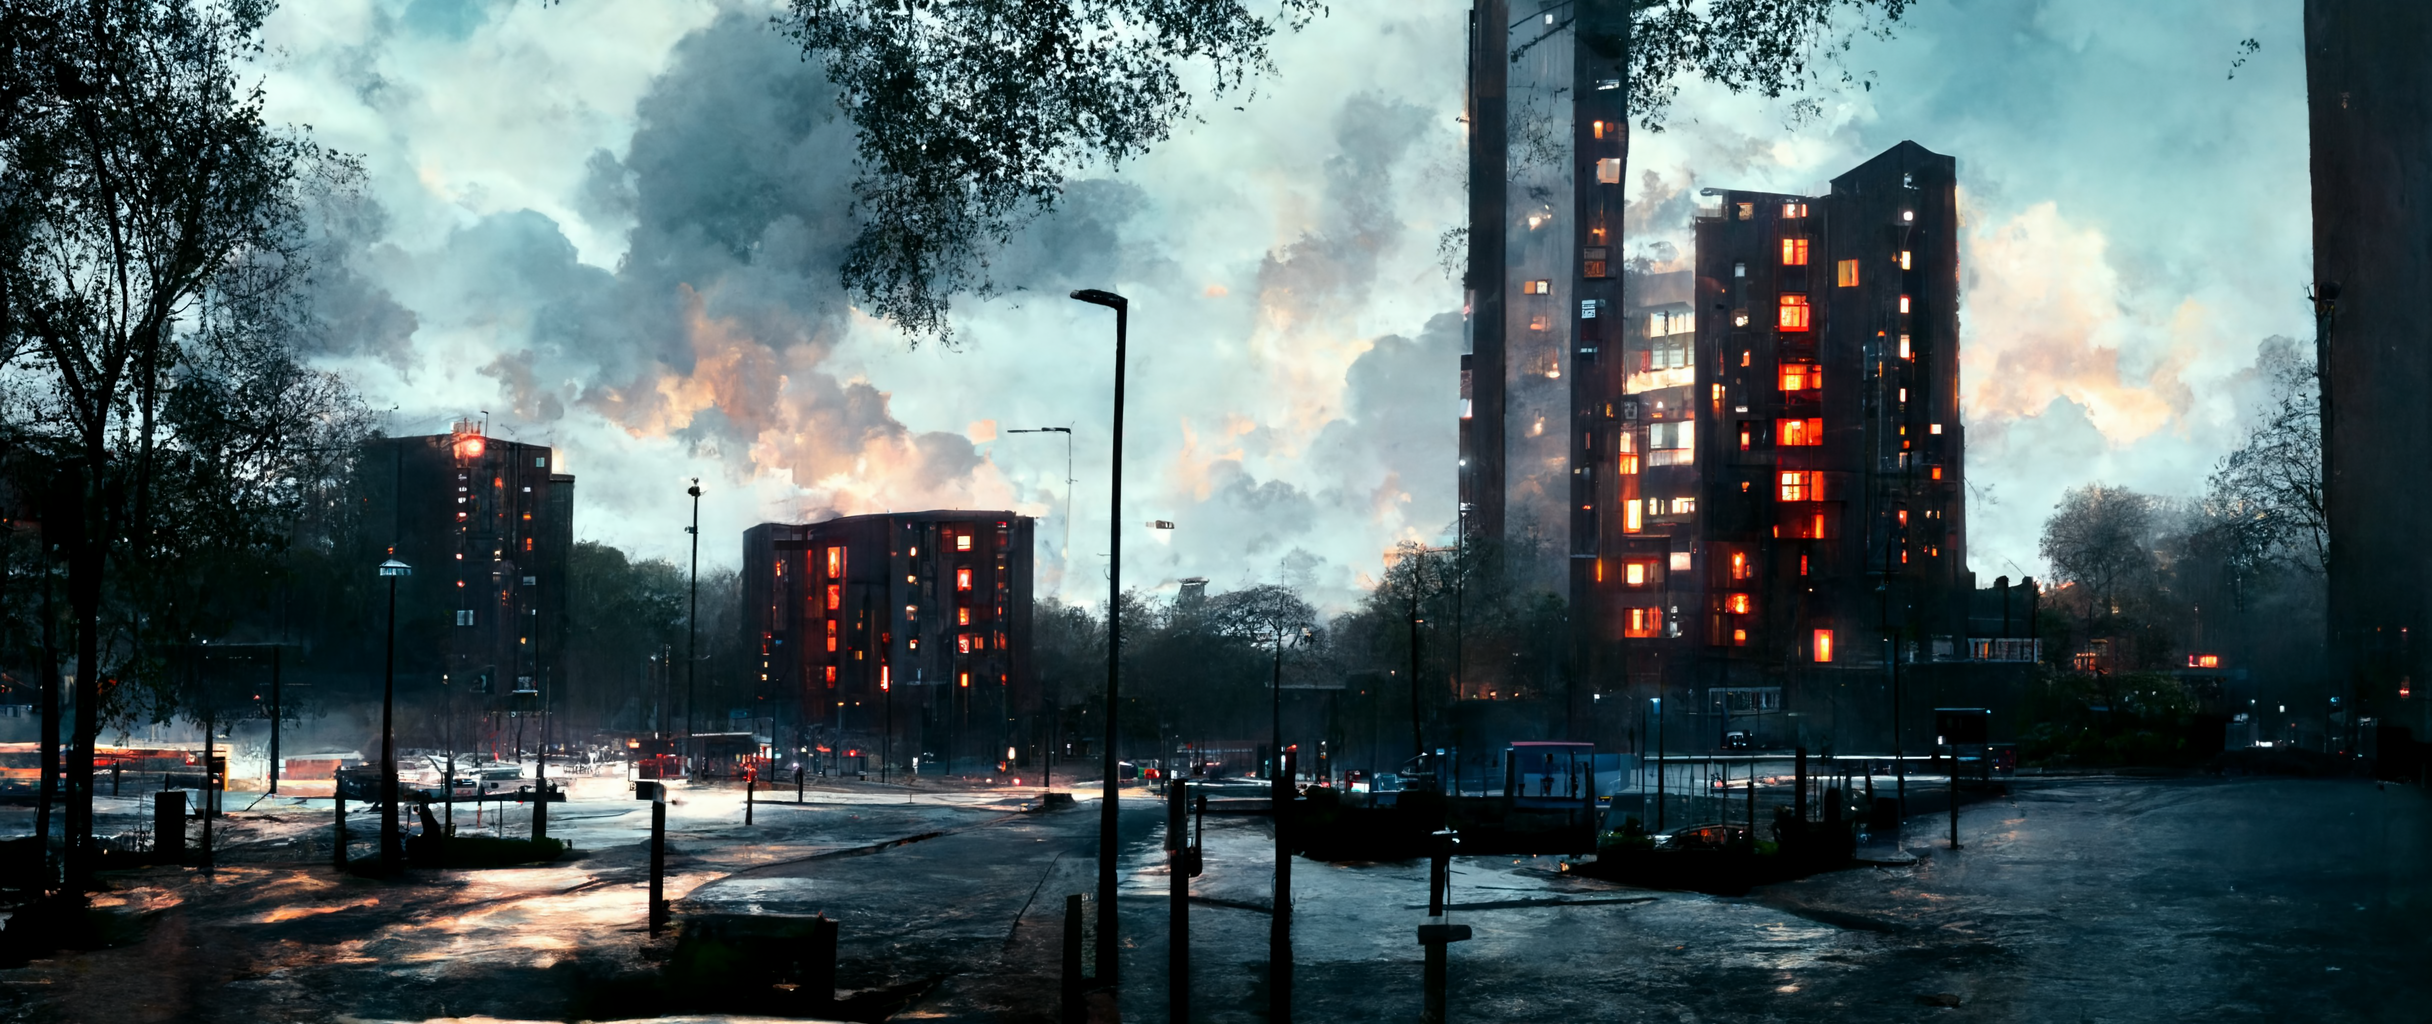 vibe_dark_housing_estate_london_fire_night_smoke_cinematic_ultr_18270e0d-6fda-4f8c-a703-61cf4c6ee04d